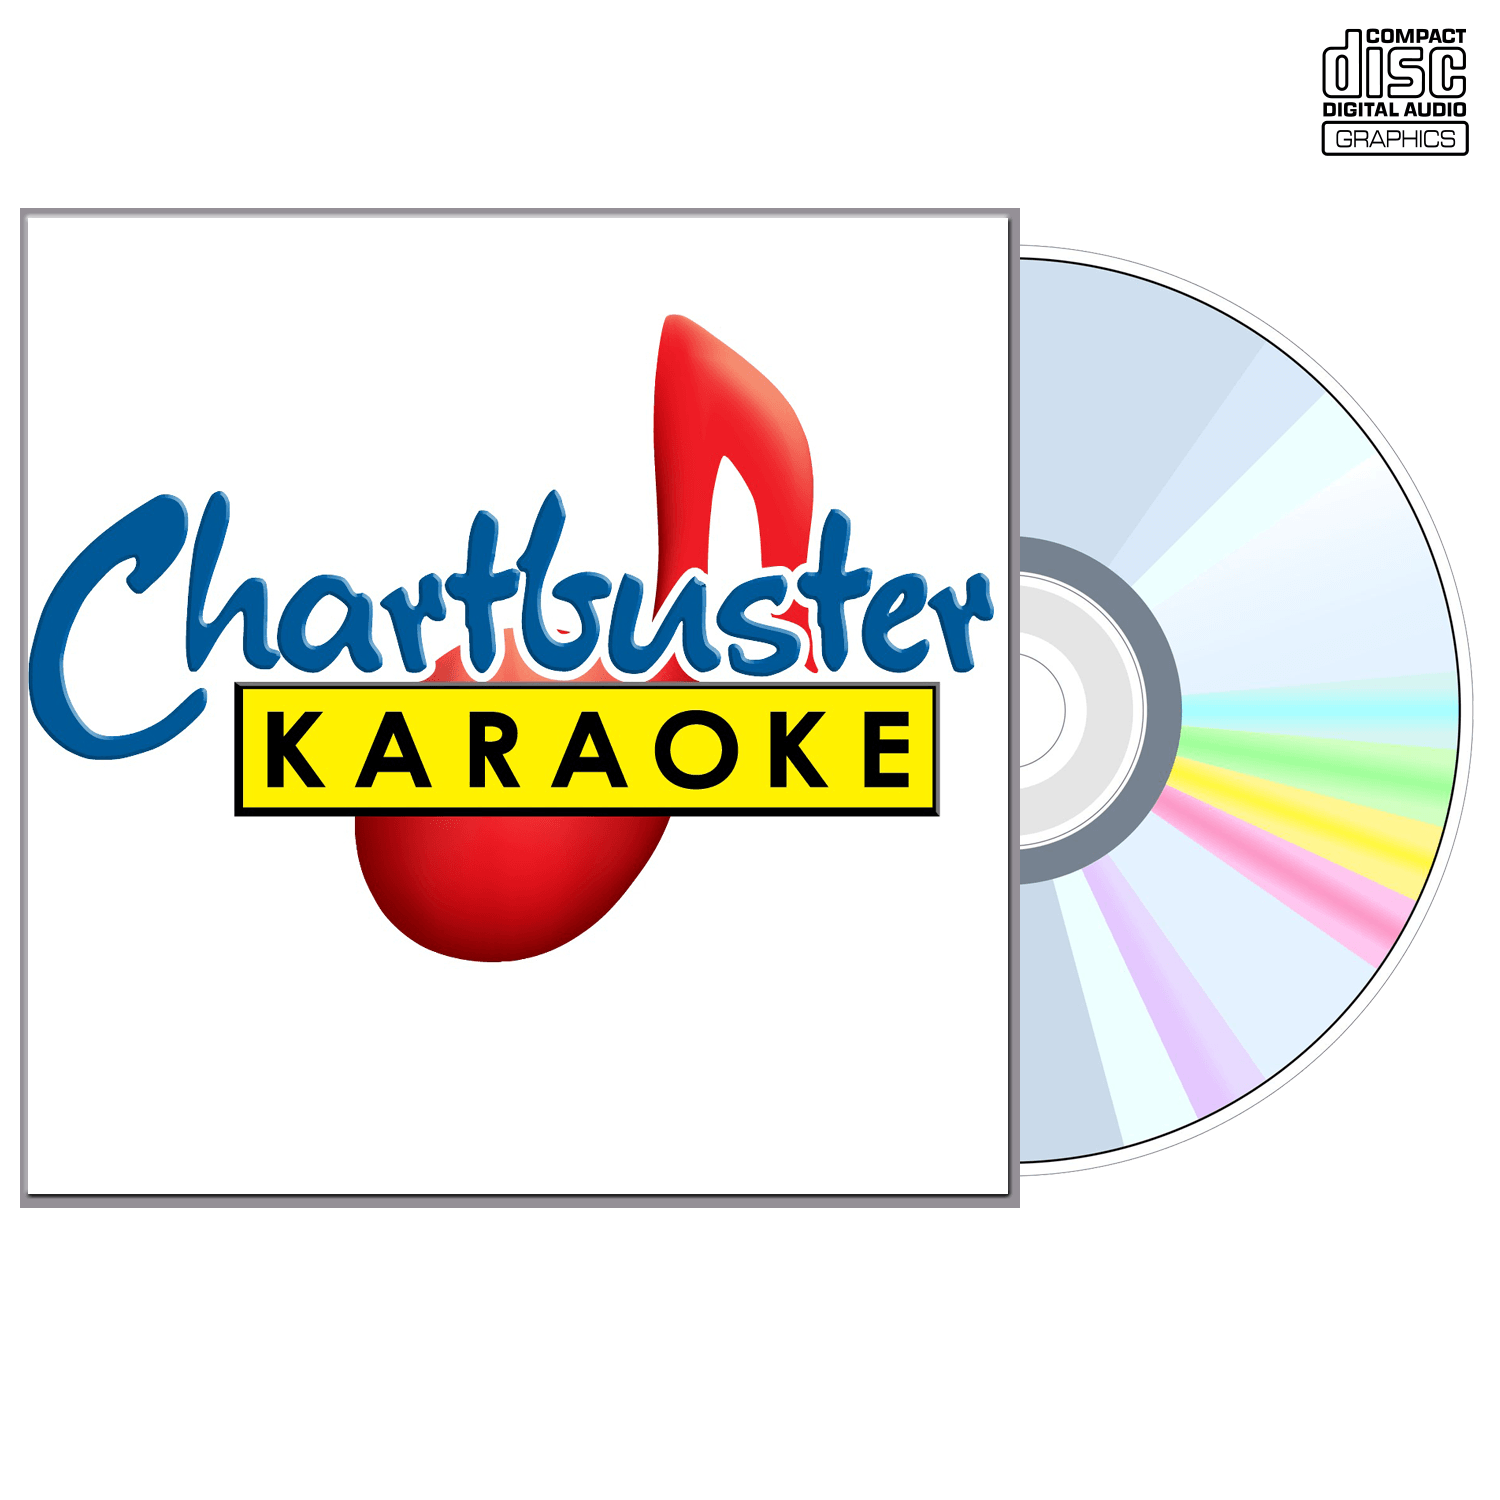 Country Mix Vol 08 - CD+G - Chartbuster Karaoke - Karaoke Home Entertainment